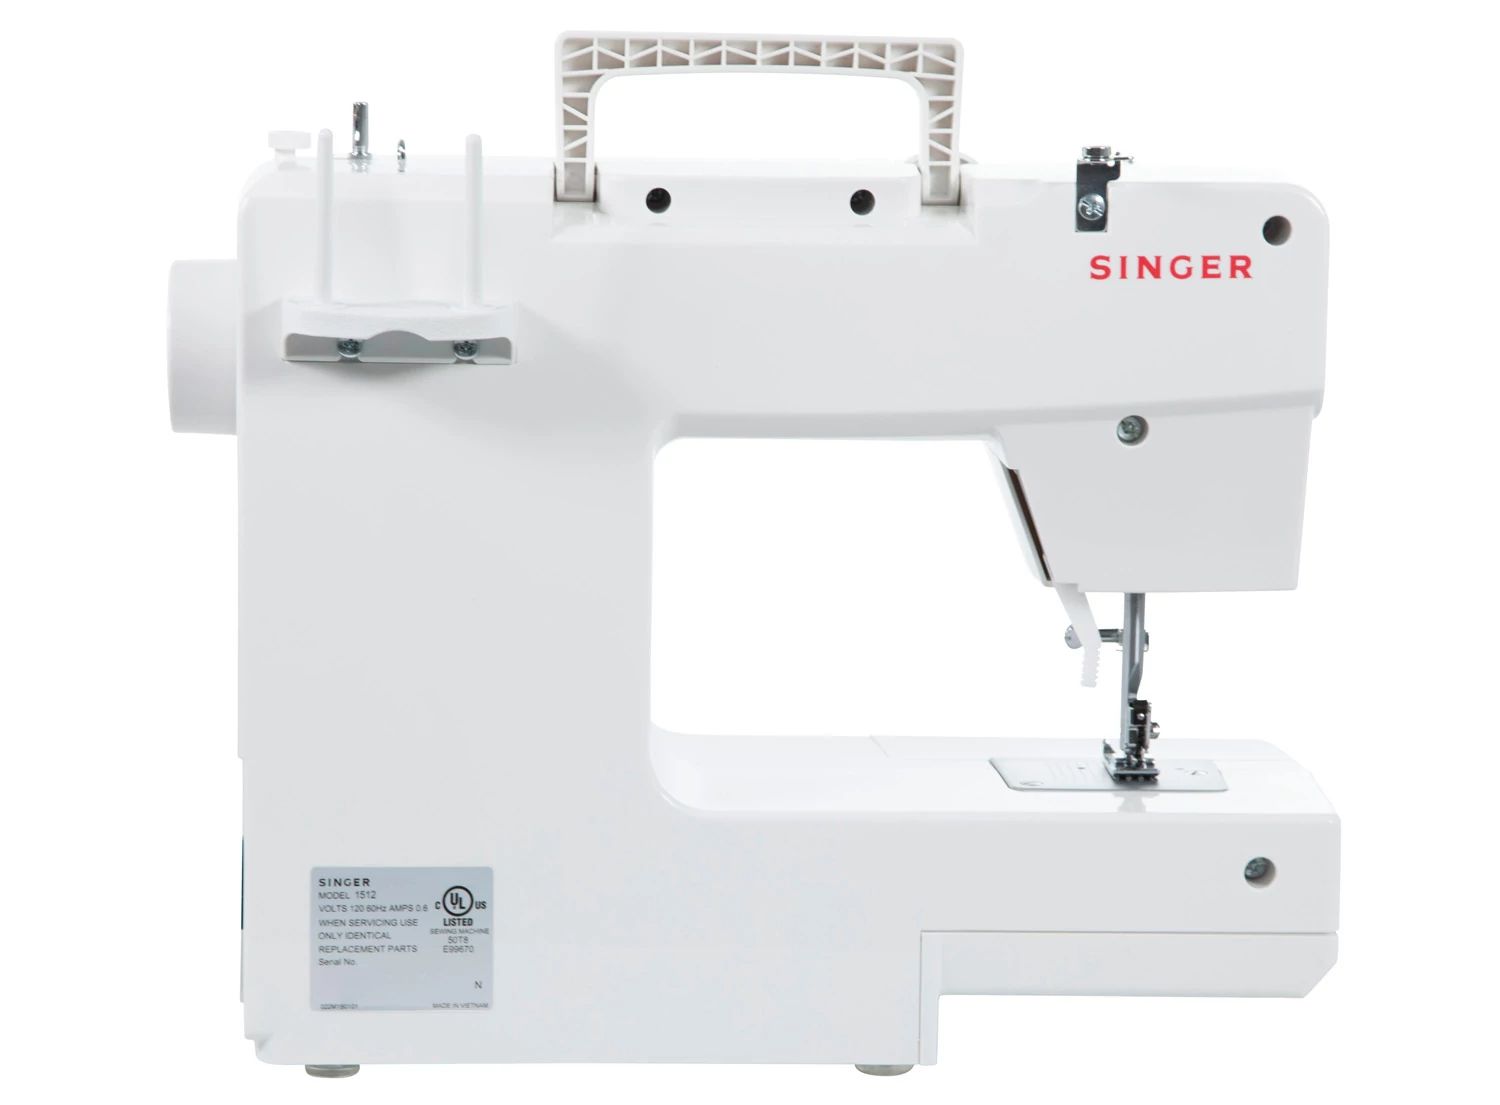 Singer Refurbished Promise™ II 1512 Sewing Machine